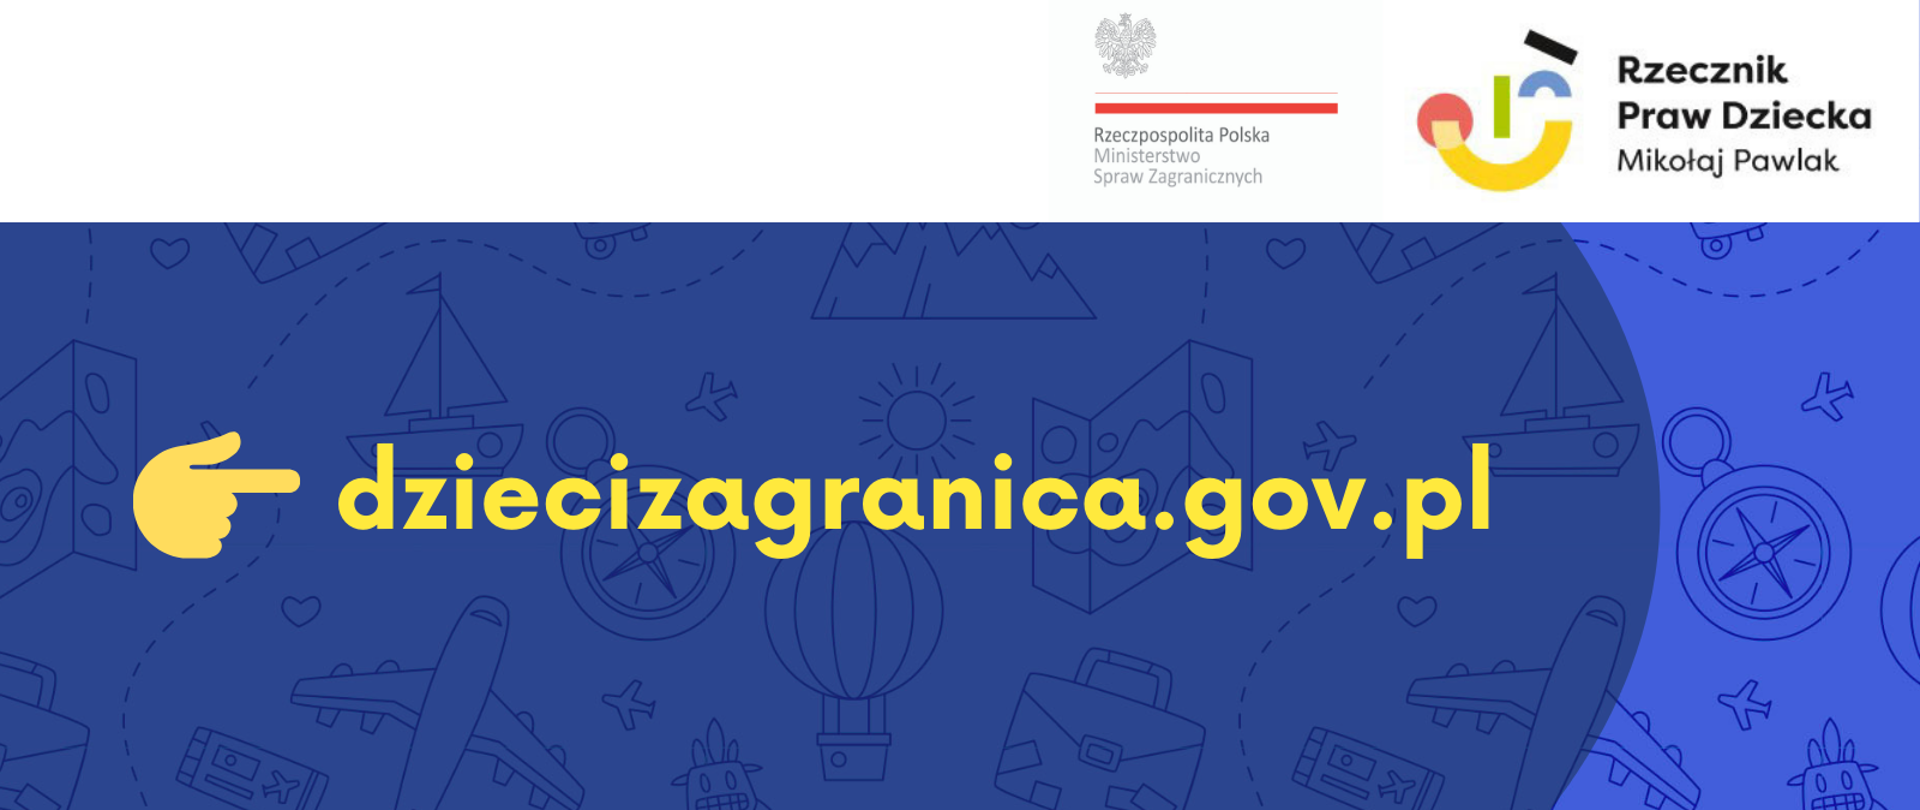 Grafika dziecizagranica.gov.pl